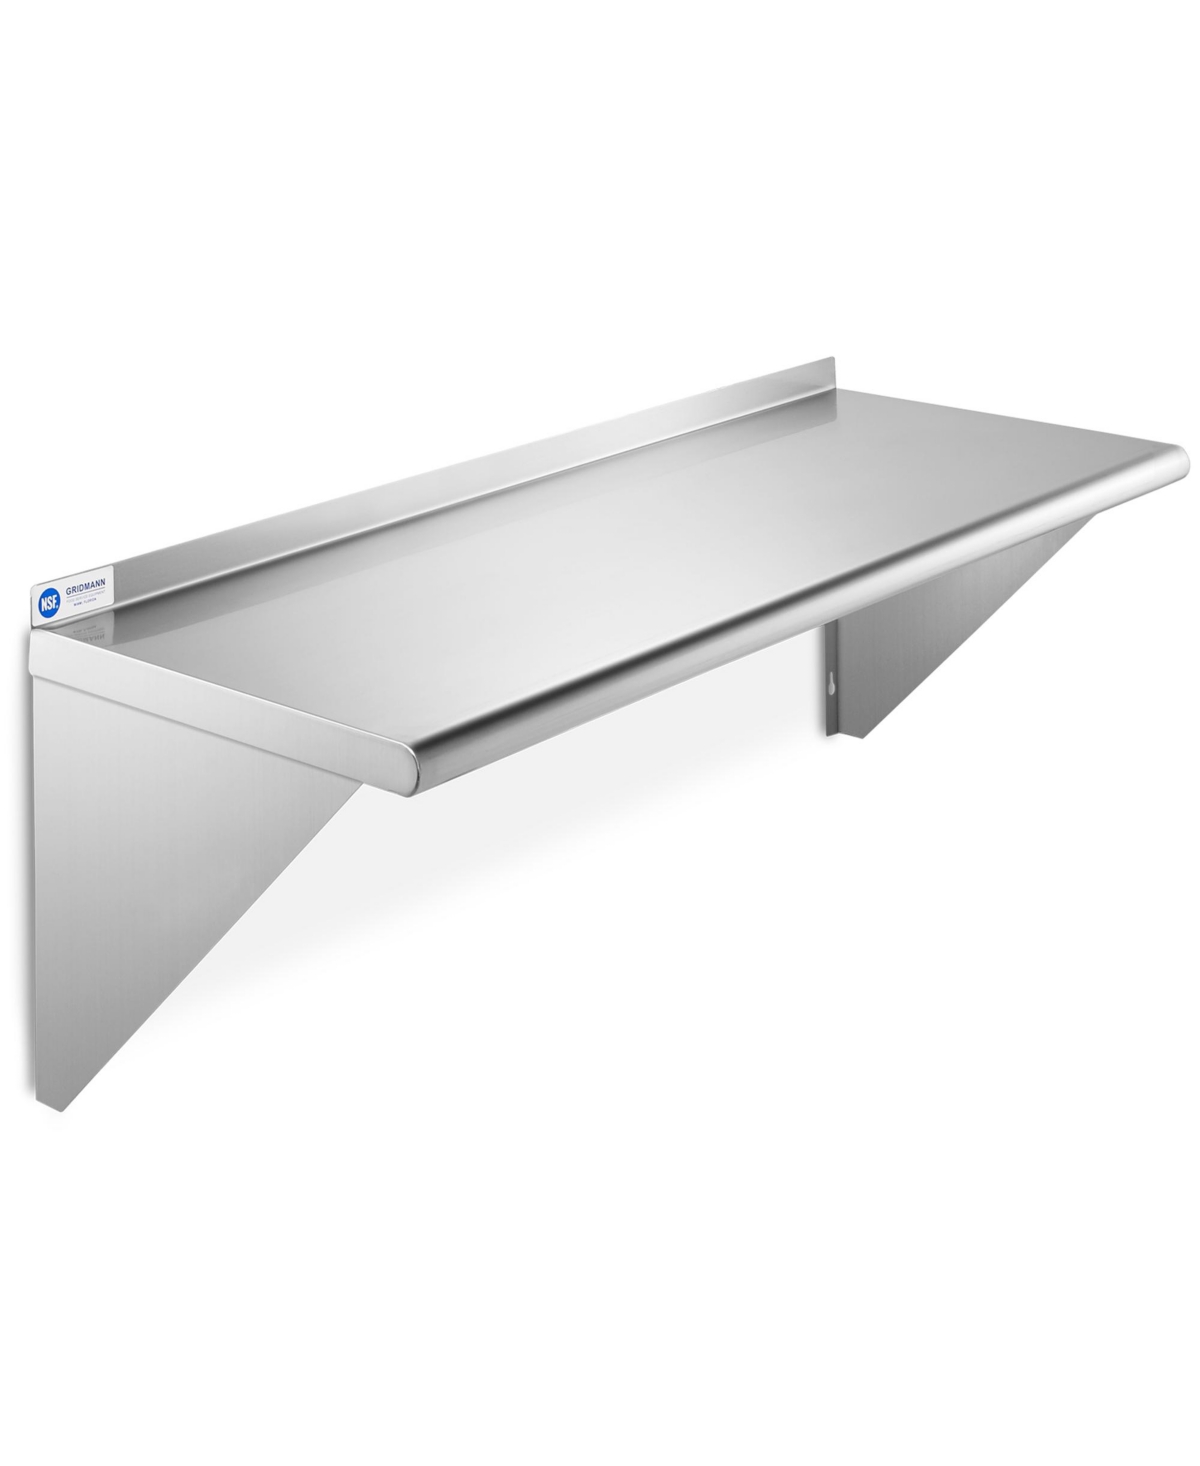 18" x 48" Nsf Stainless Steel Kitchen Wall Mount Shelf w/ Backsplash - Silver